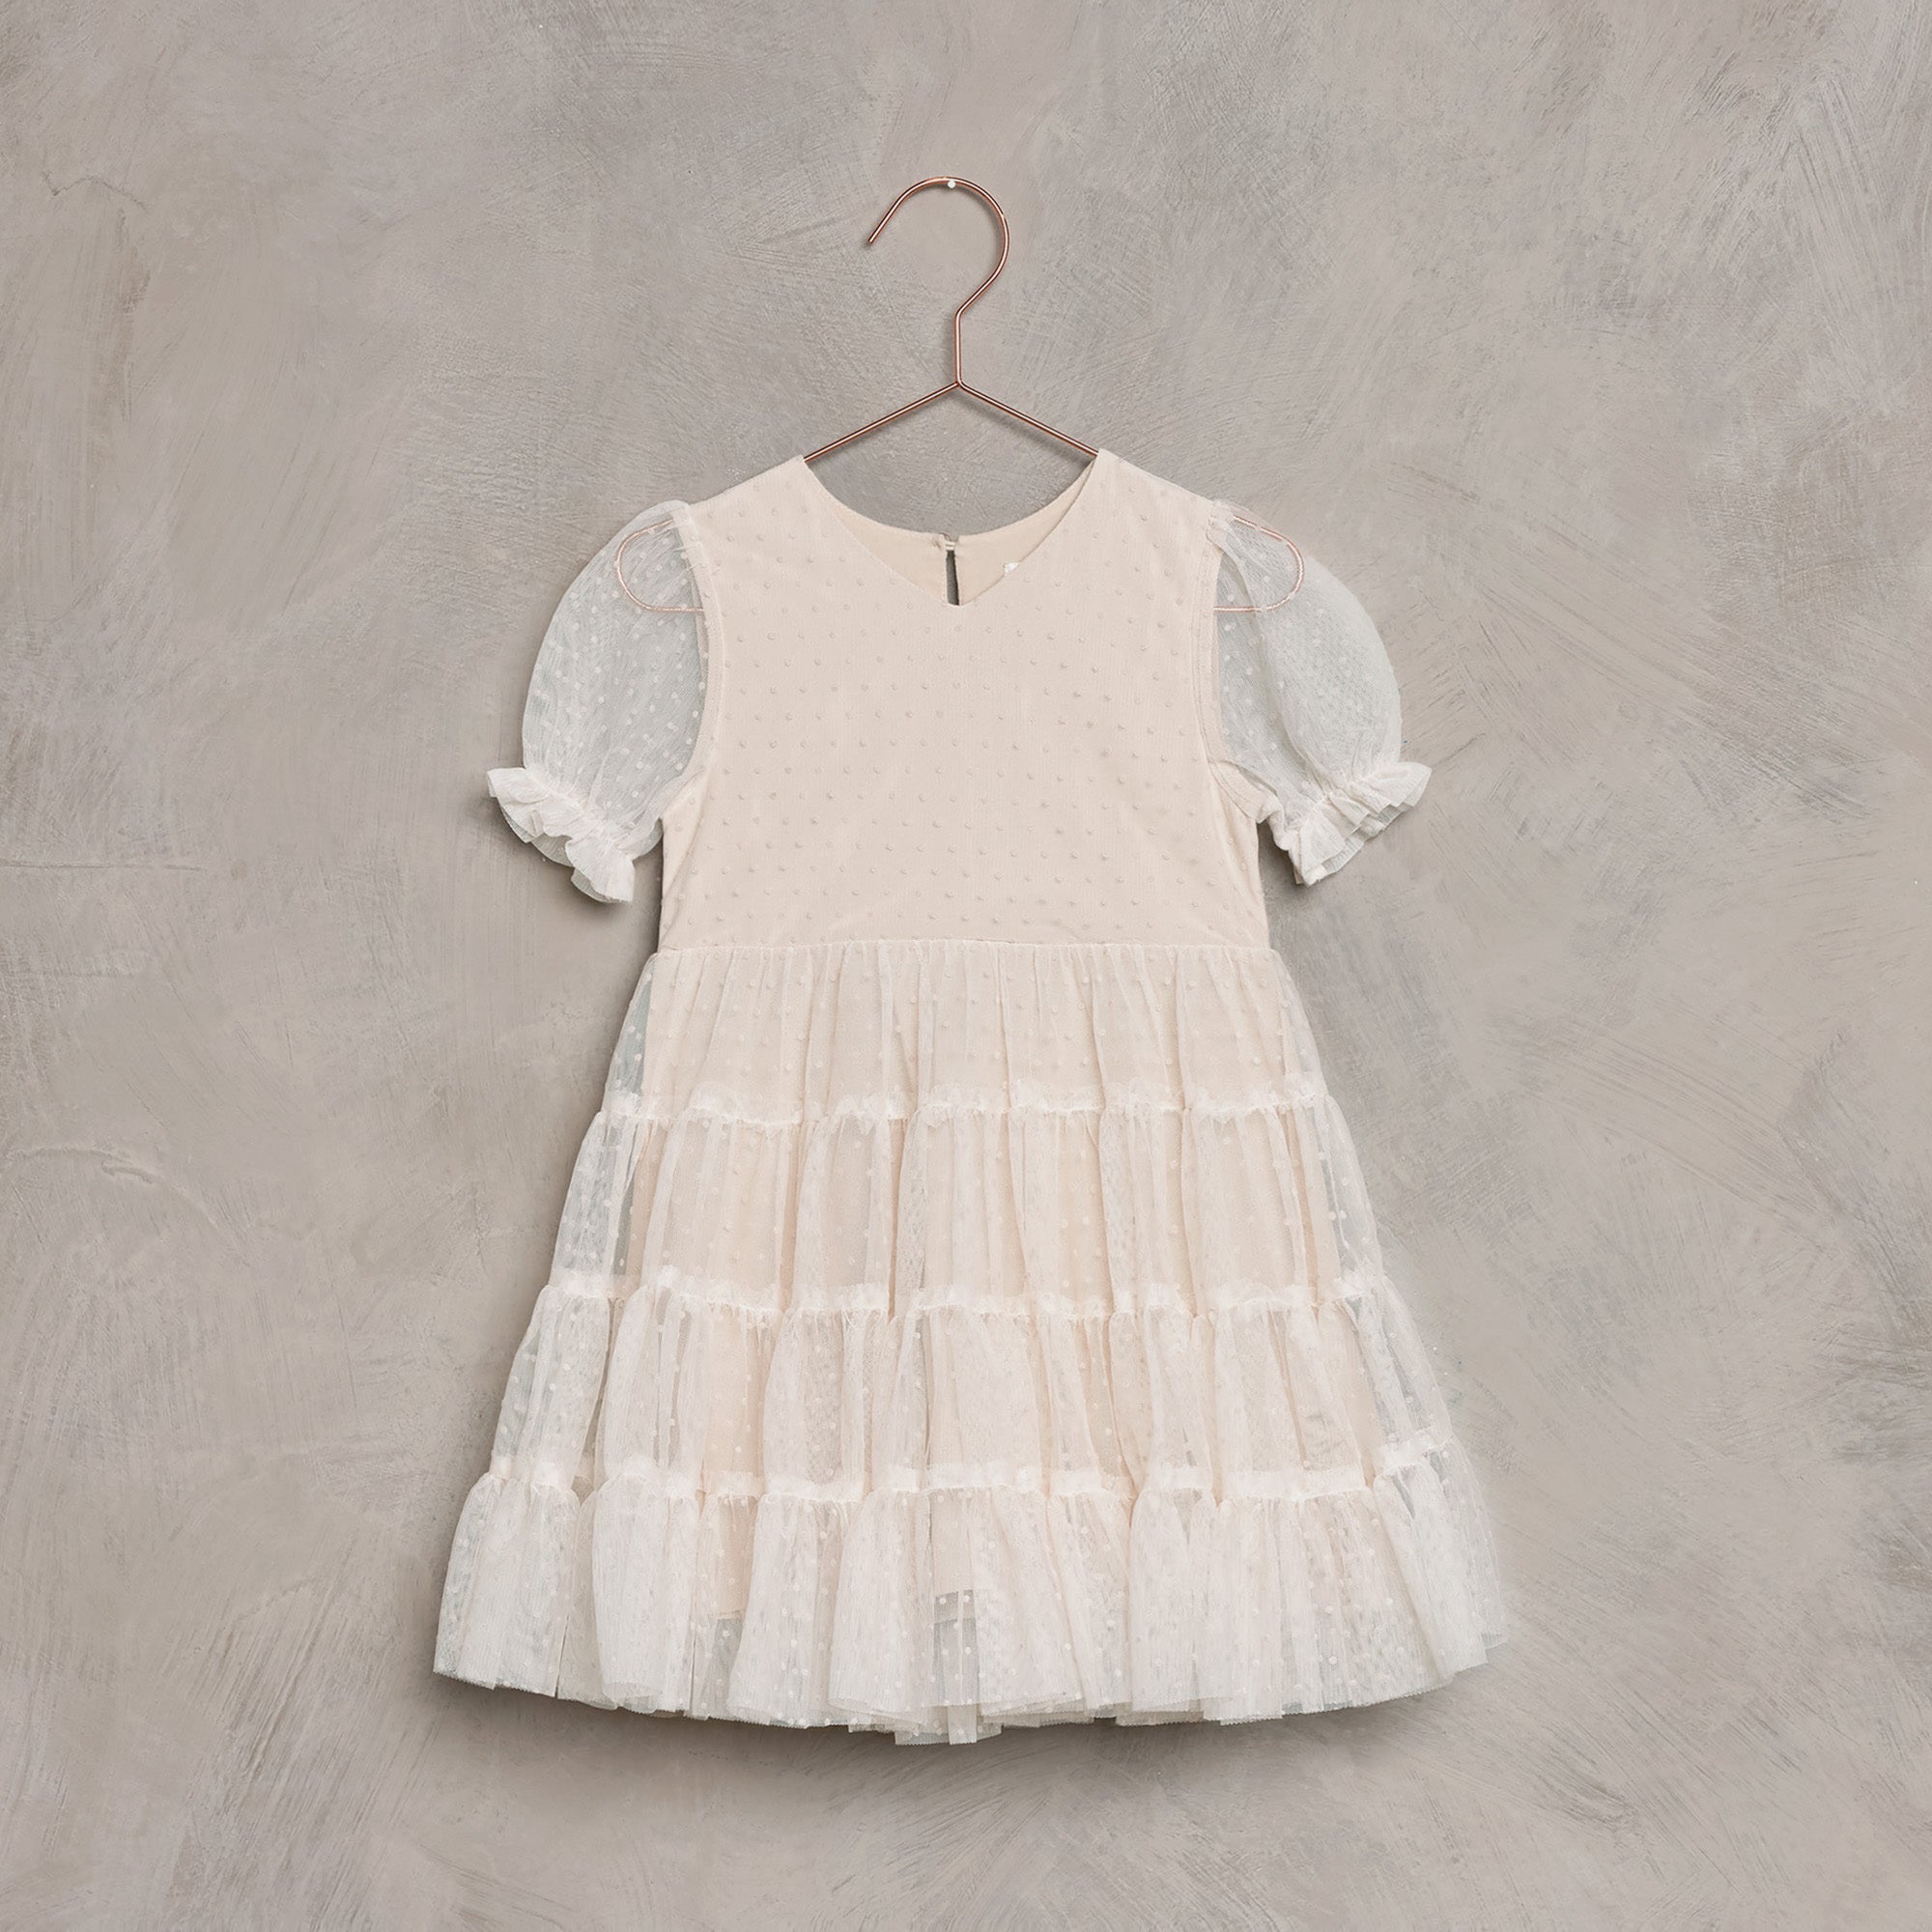 Noralee_Noralee Dottie Dress Ivory_Dresses